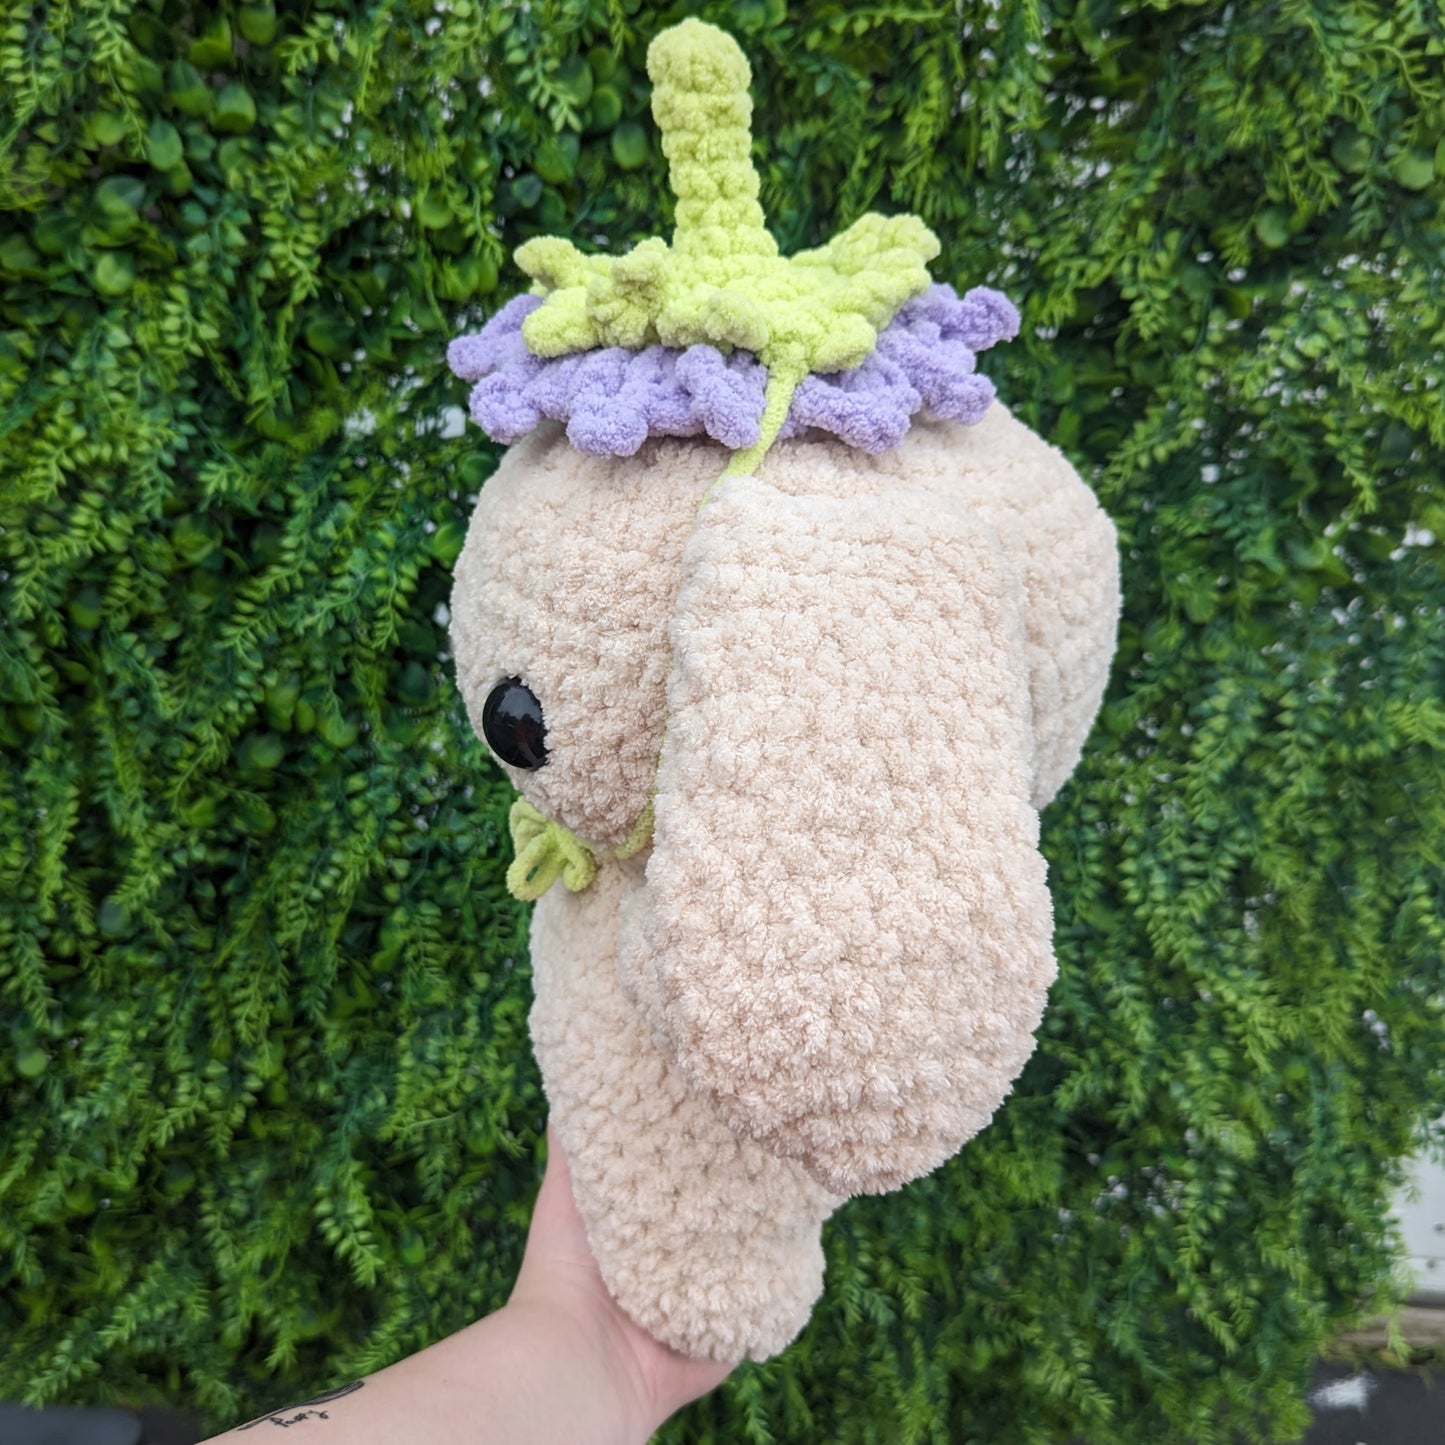 Peluche Jumbo Fuzzy Flower Bunny Crochet (sombrero removible) [Archivado]